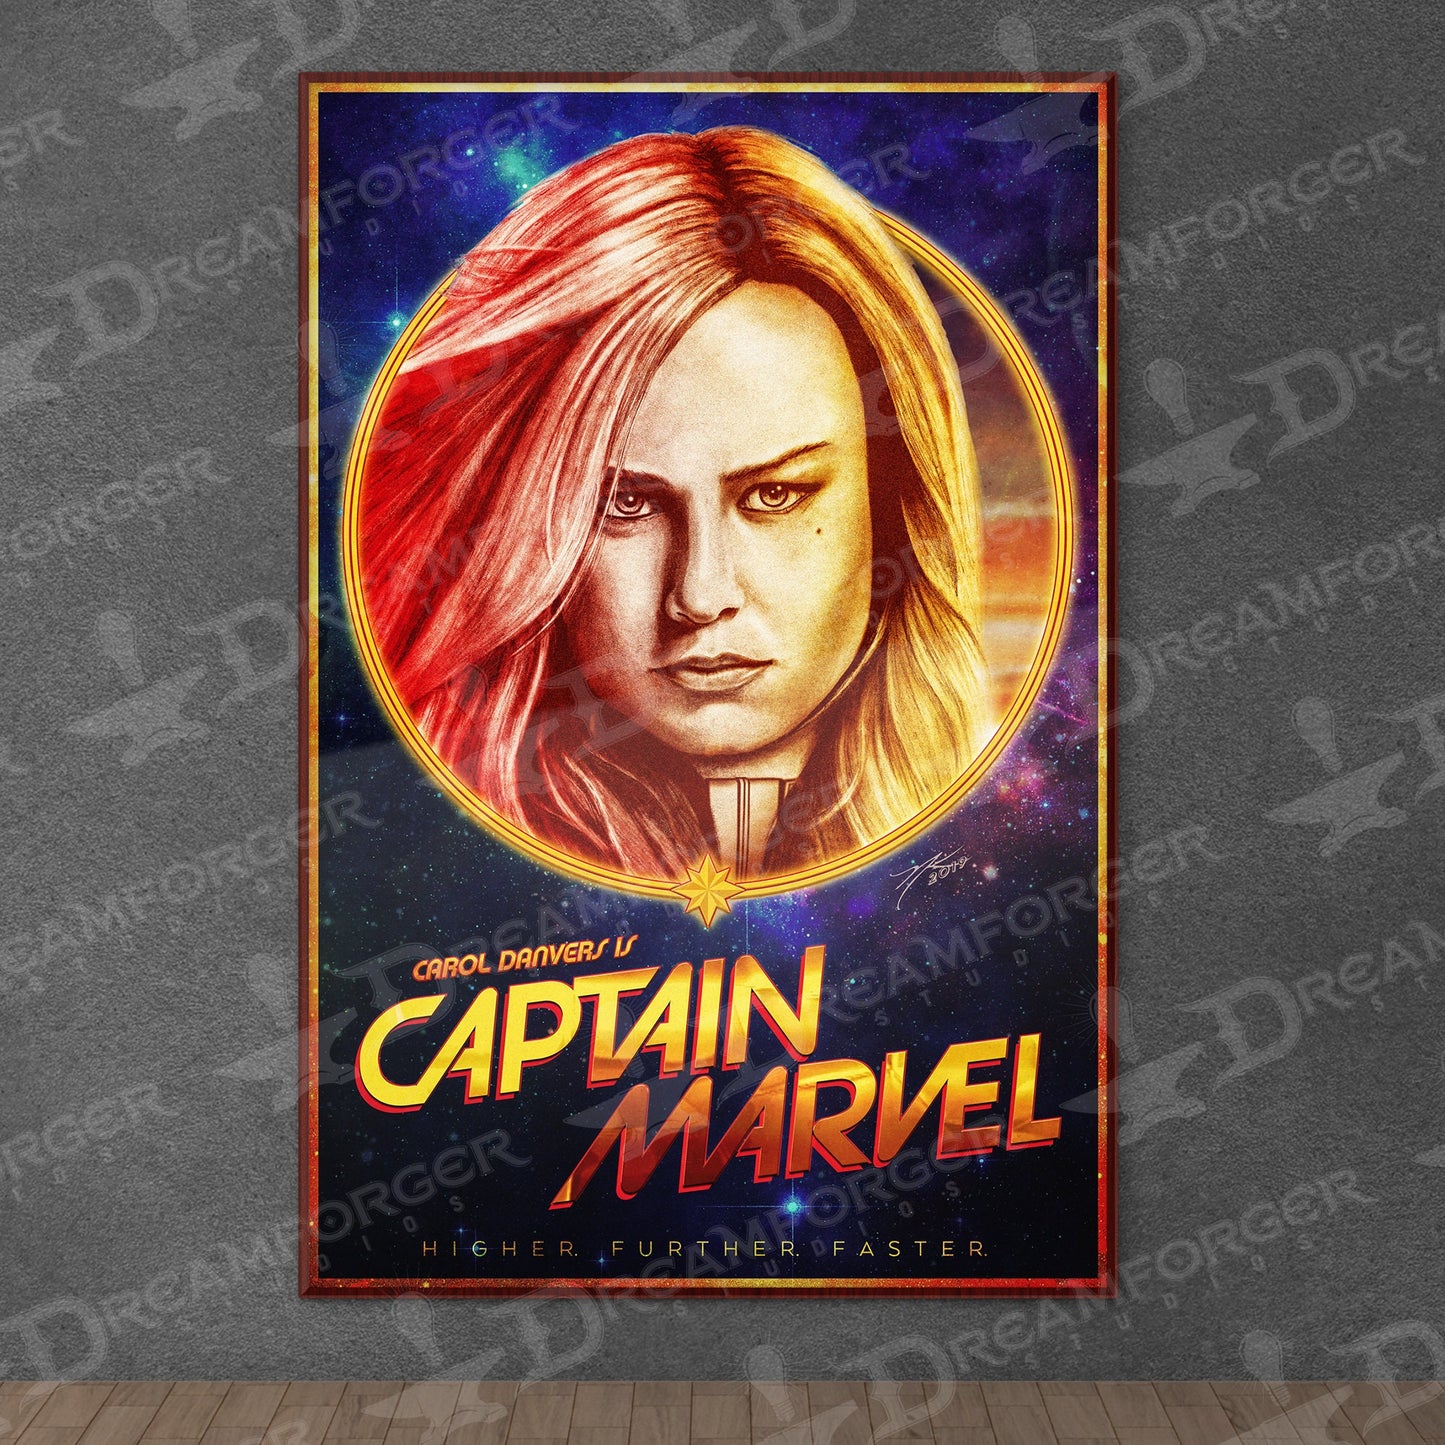 "Carol Danvers is Captain Marvel" Retro Poster